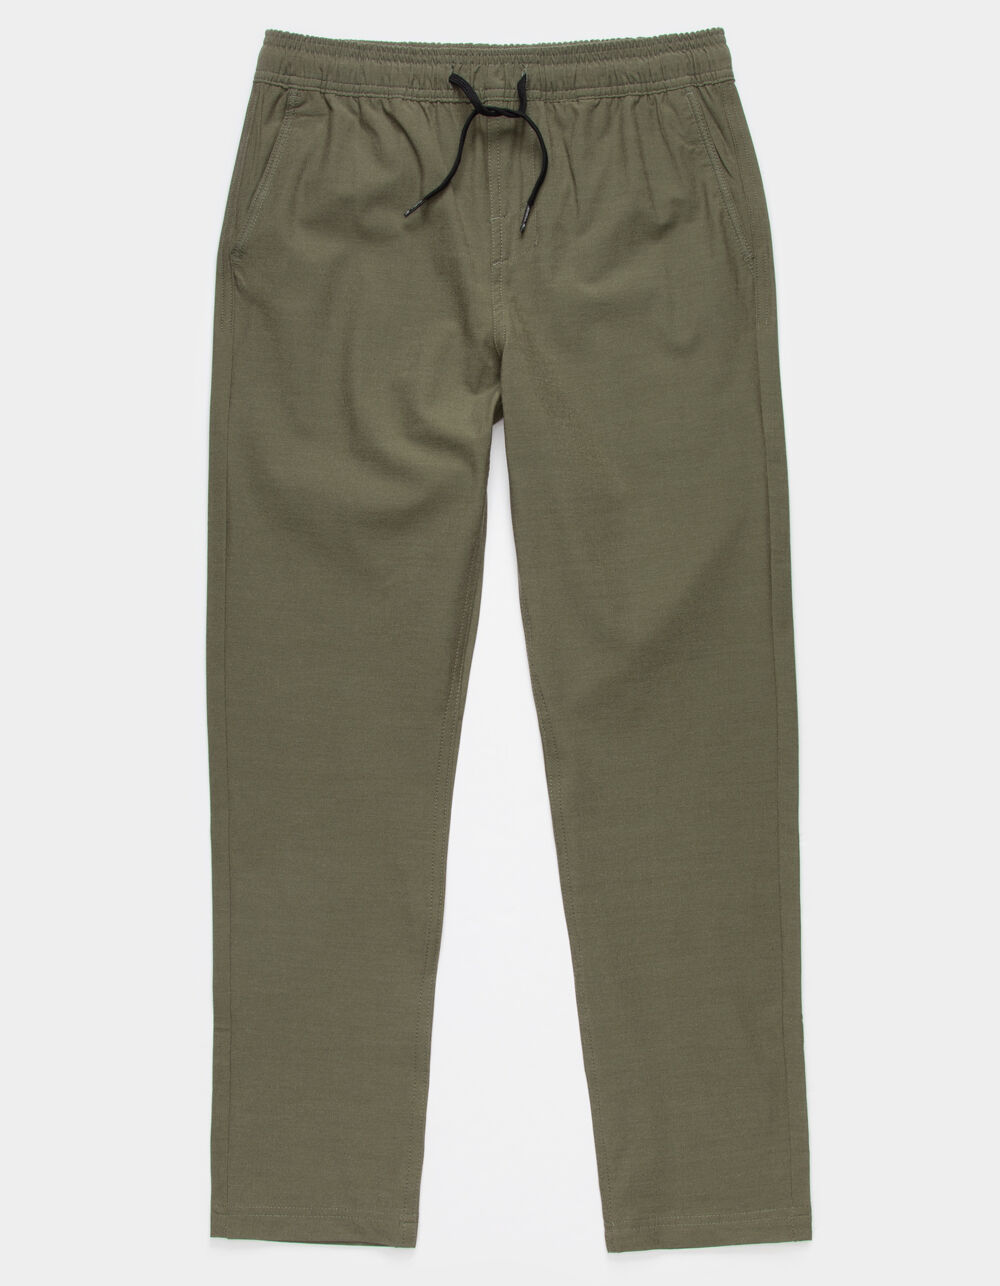 VENTURE ELASTIC WAIST HYBRID PANTS  Hybrid pants, Lightweight pants,  Hybrid clothing